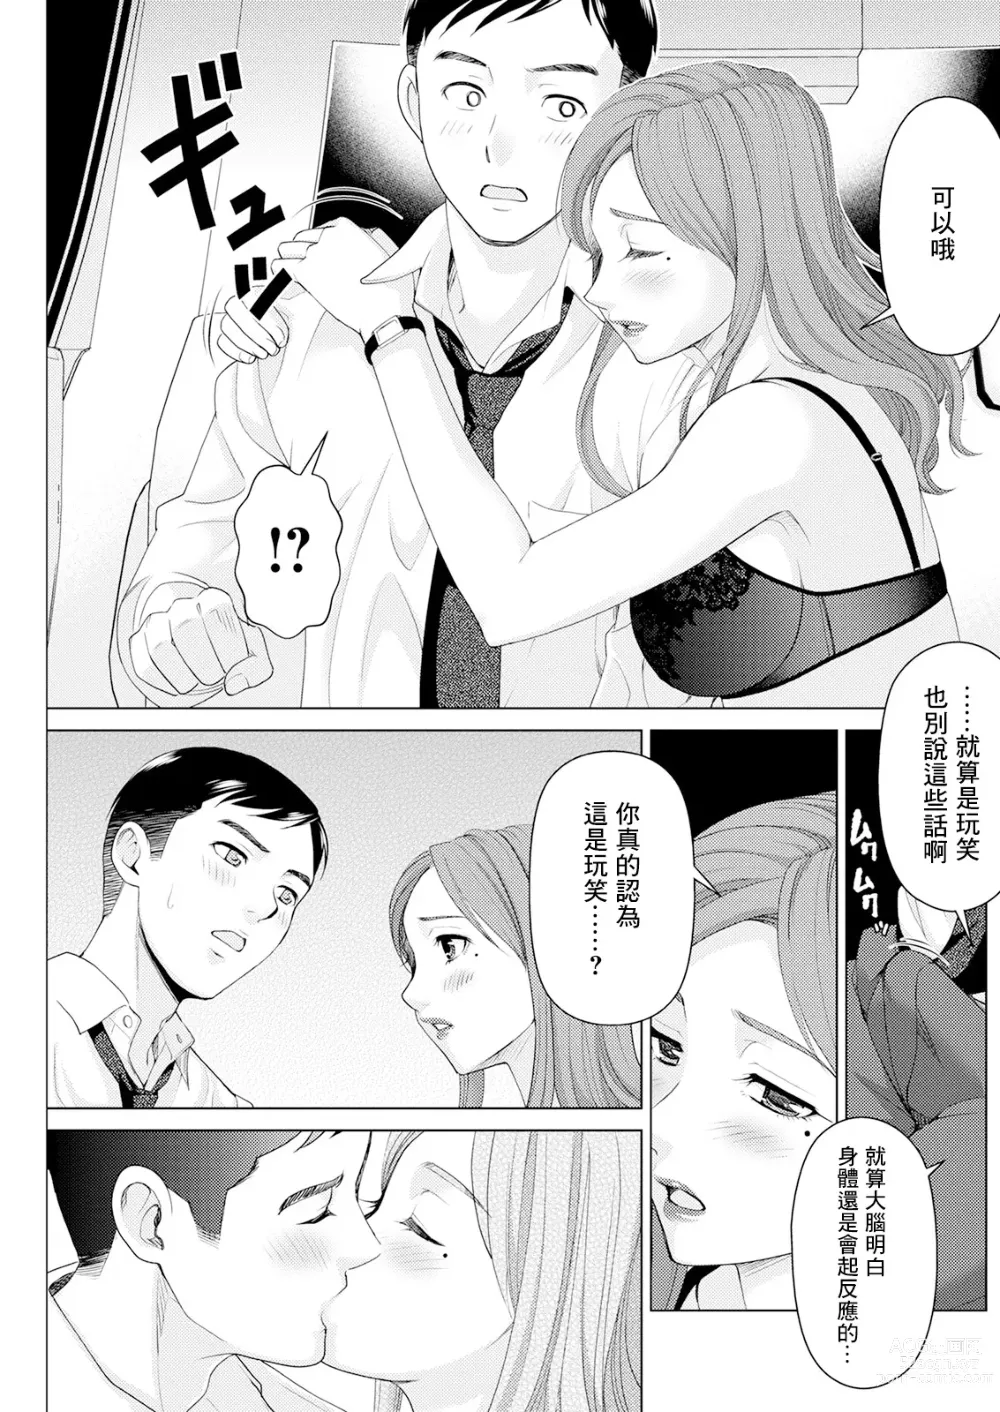 Page 7 of manga Kawari, Hateru.